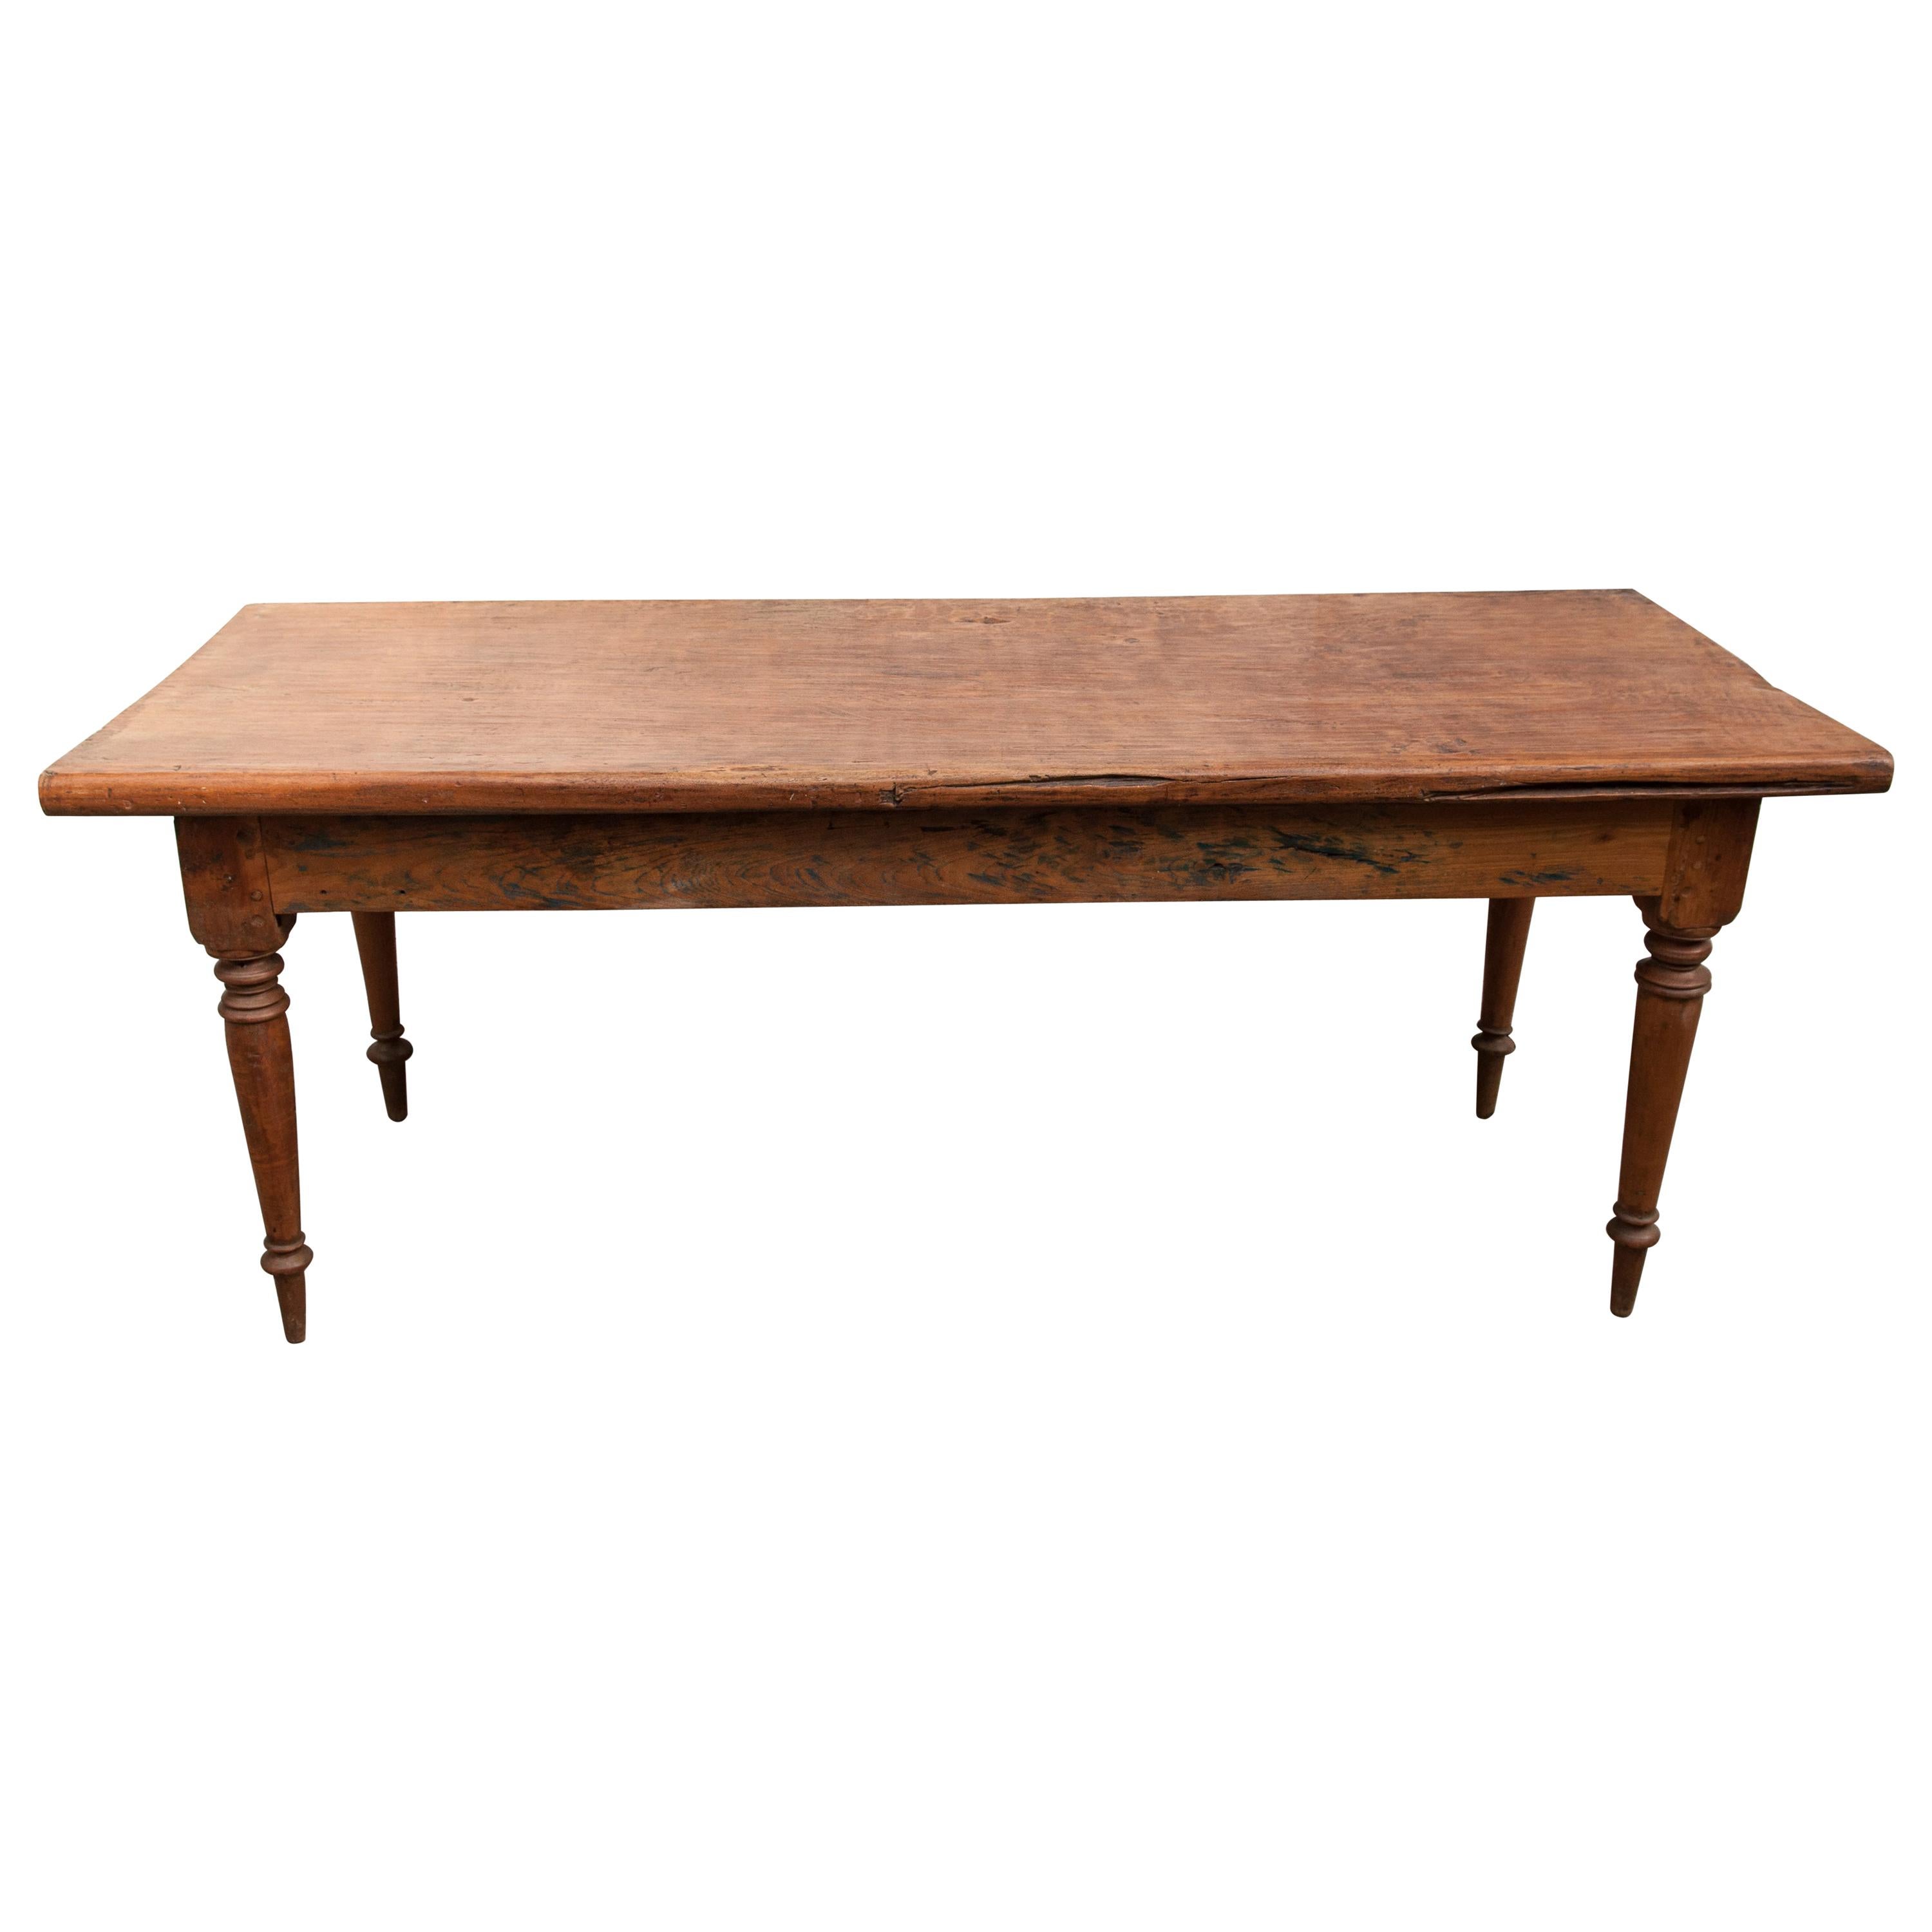 Vintage Teak Kitchen or Farm Table, Java, Single Plank Top, Mid-20th Century